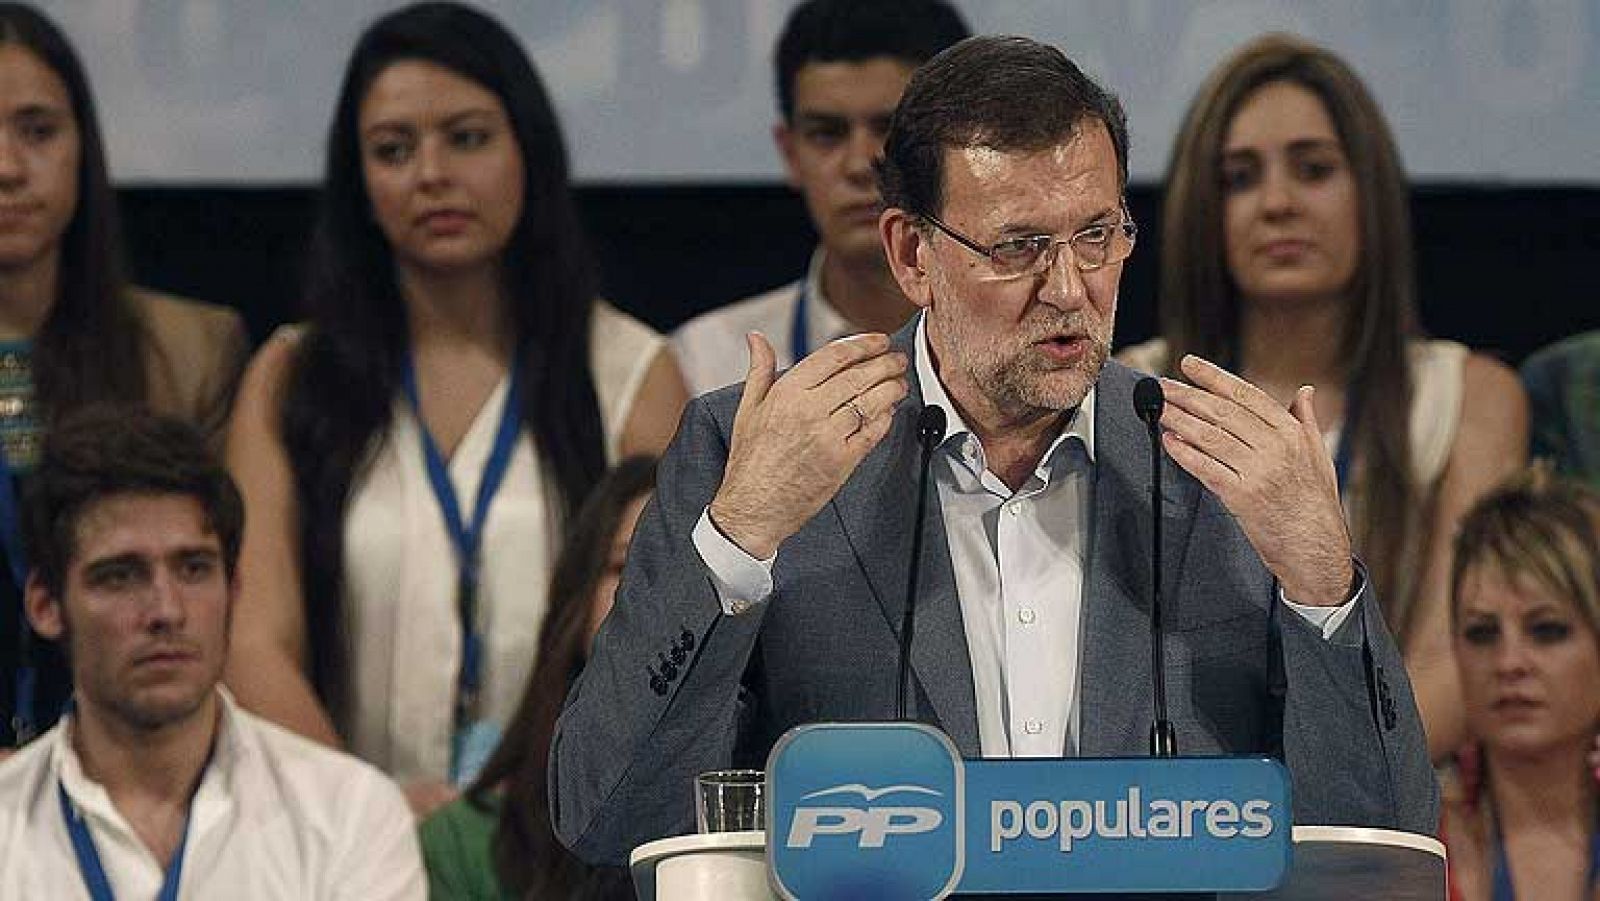 Telediario 1: Rajoy: "El pesimismo, en retirada" | RTVE Play